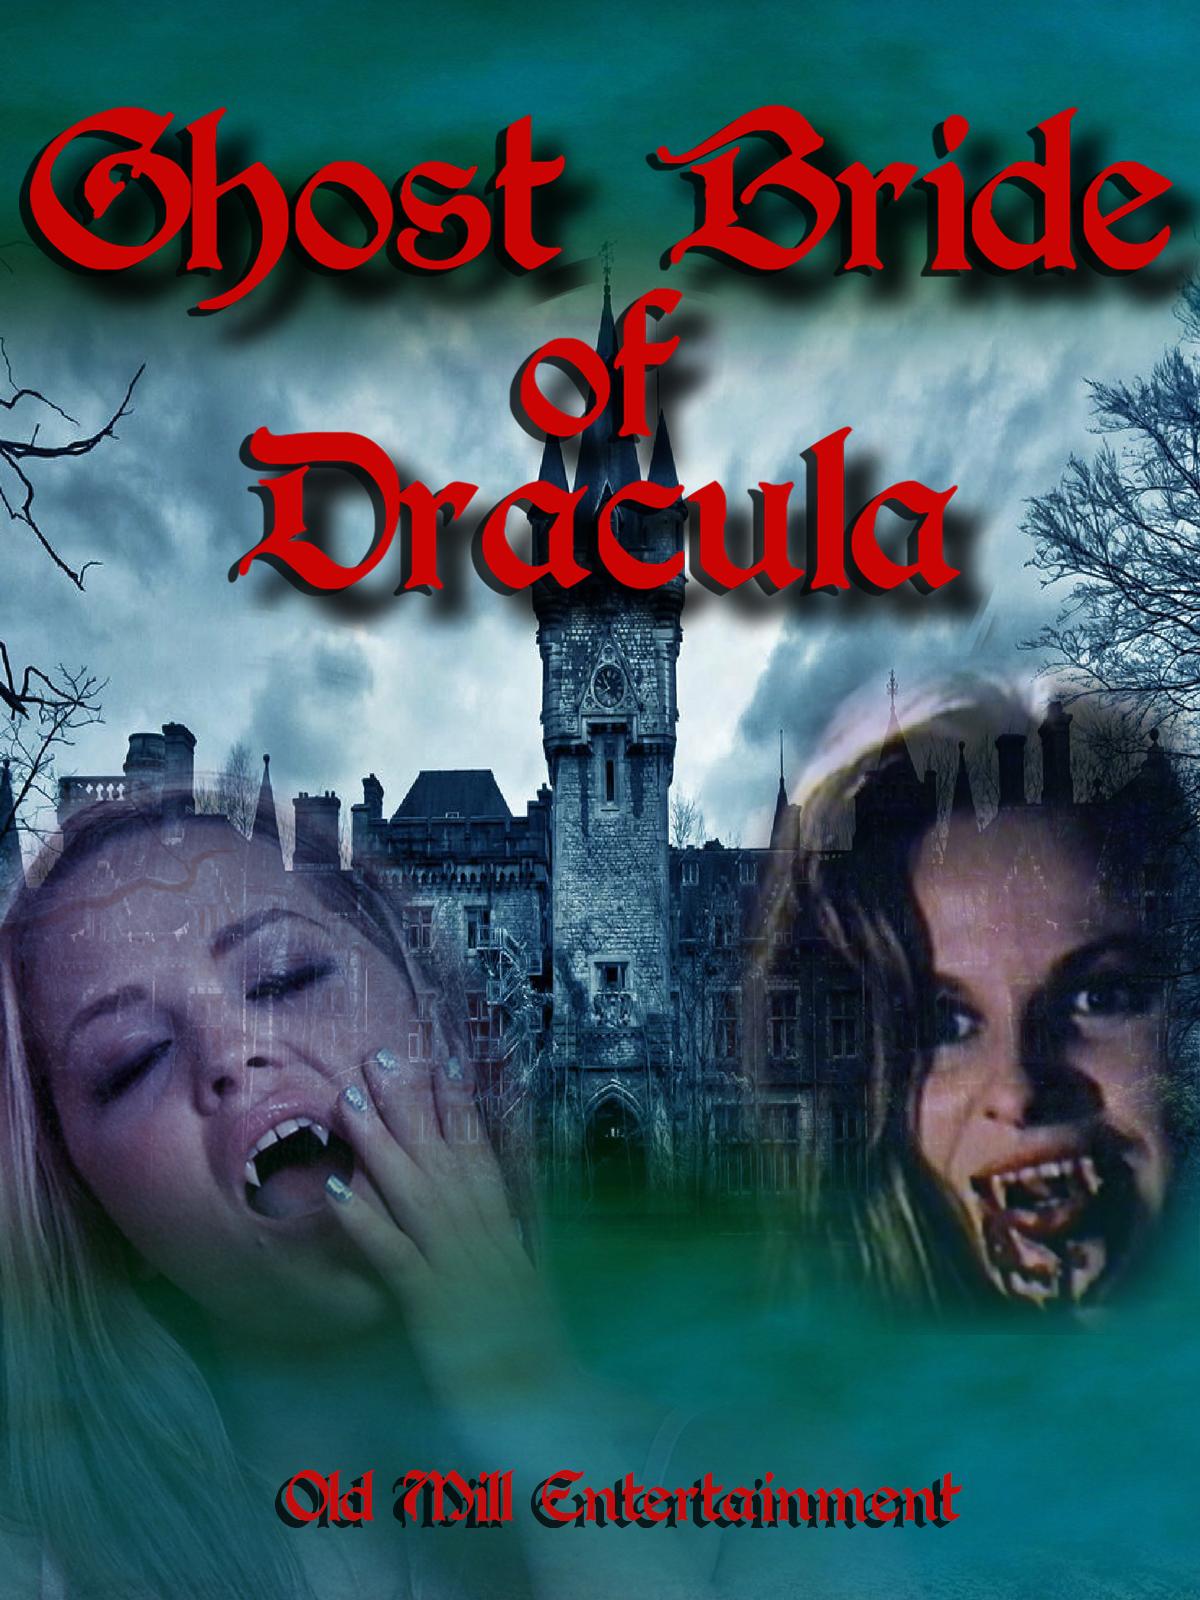 arlene teves recommends Erotic Tale Of Ms Dracula